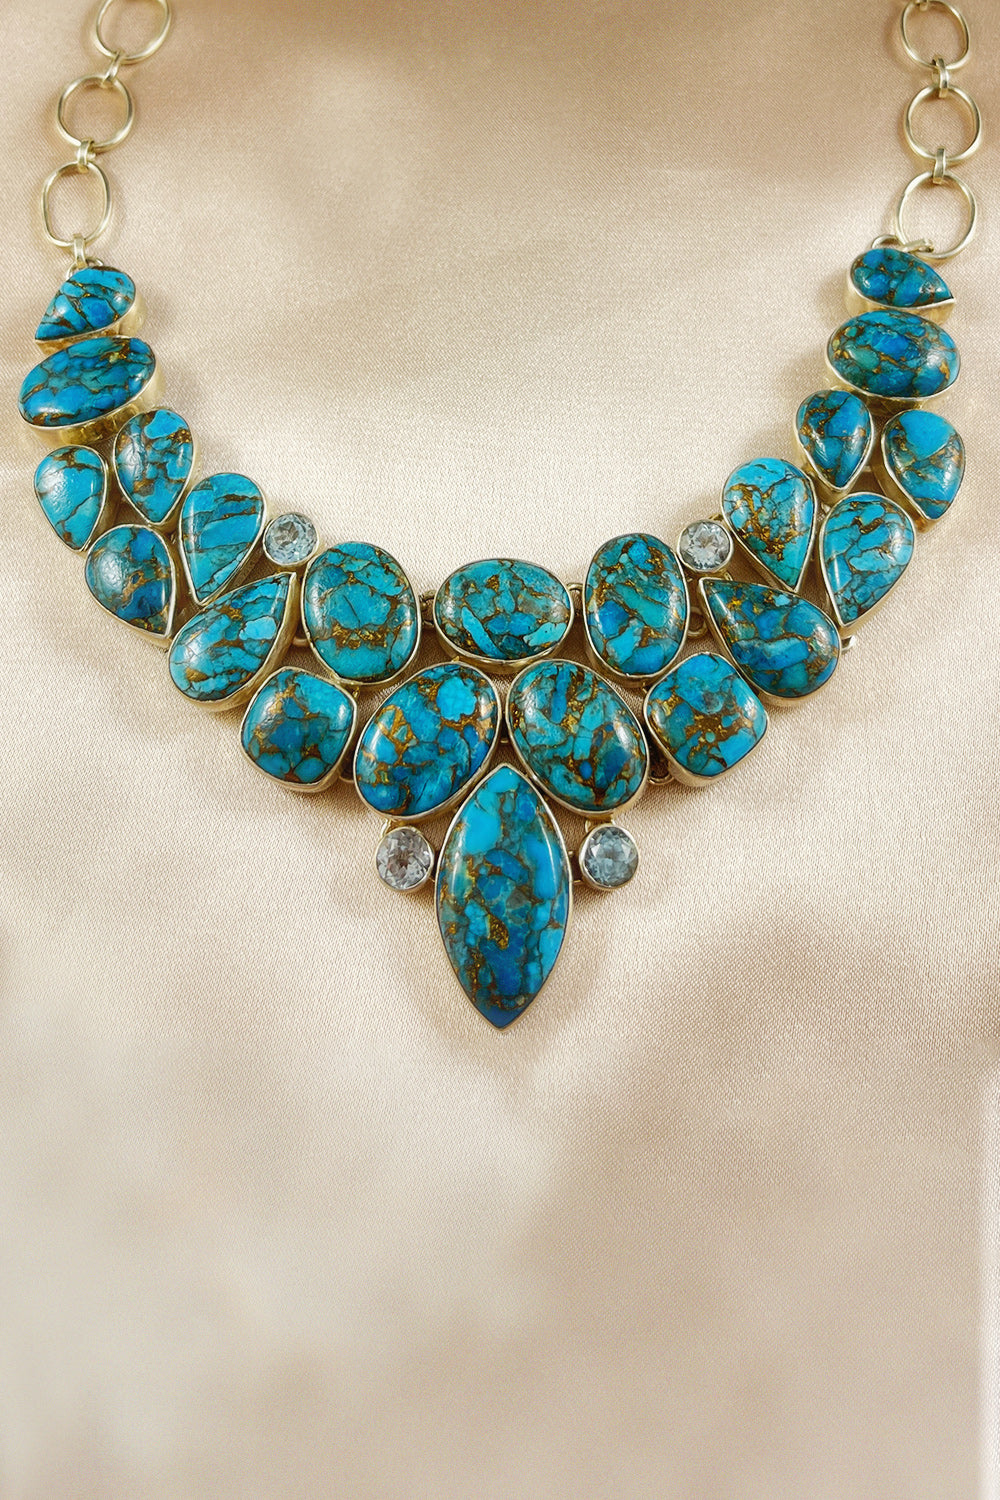 Turquoise Statement Necklace - Multi Gemstone